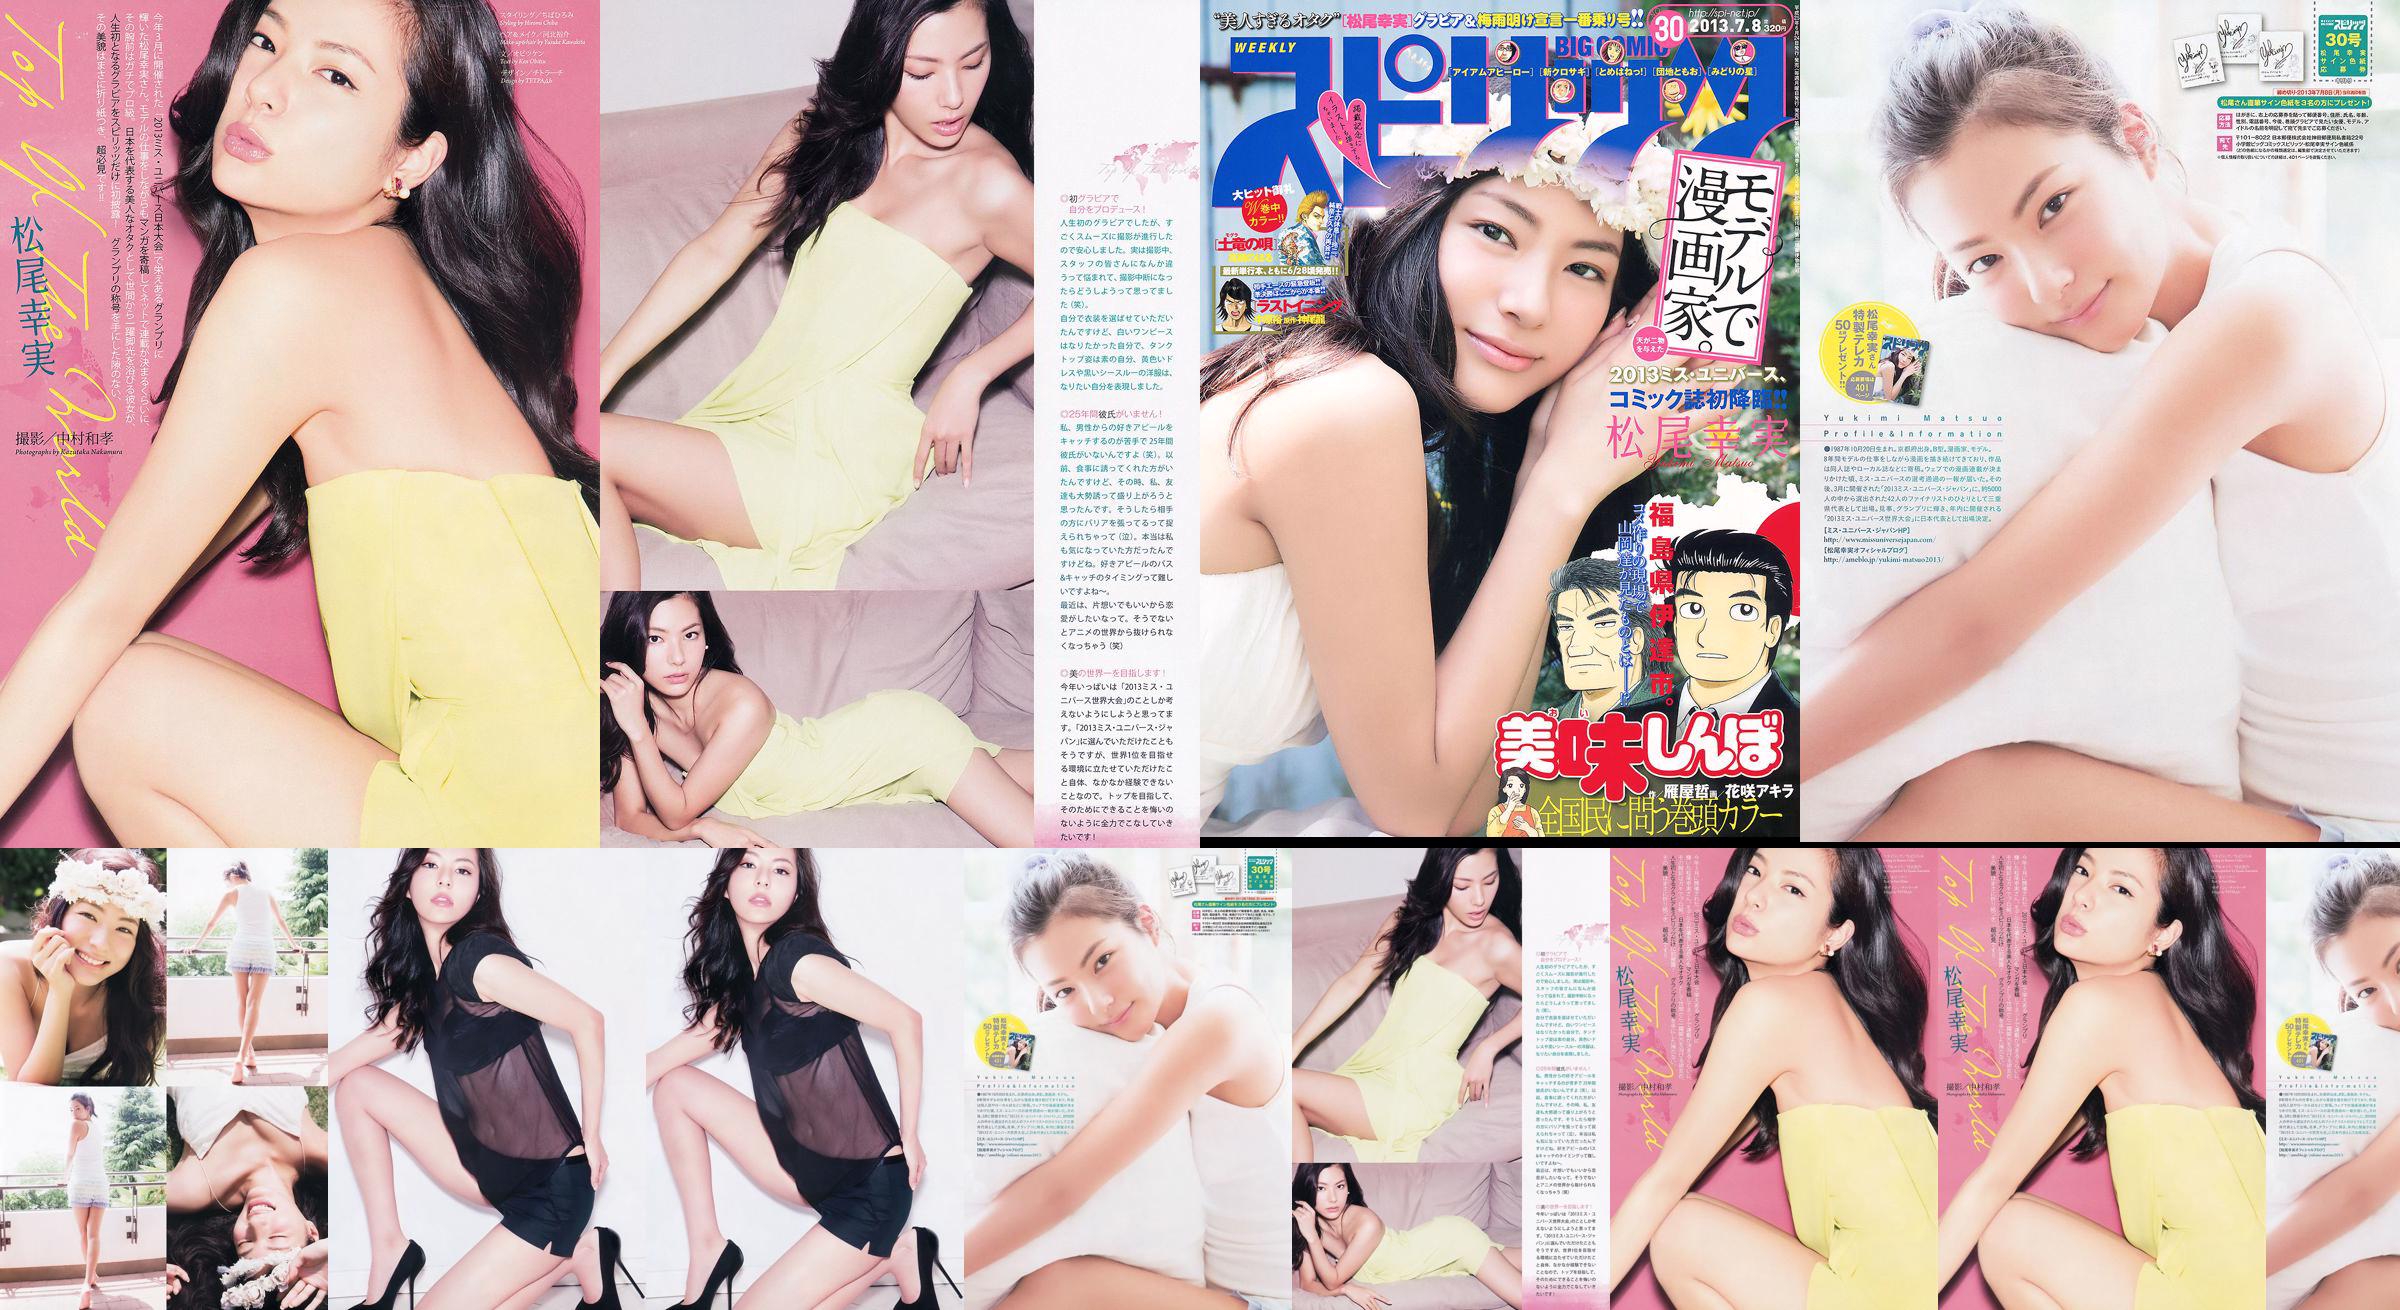 [Wöchentliche große Comic-Geister] Komi Matsuo 2013 No.30 Photo Magazine No.4ee8c8 Seite 2